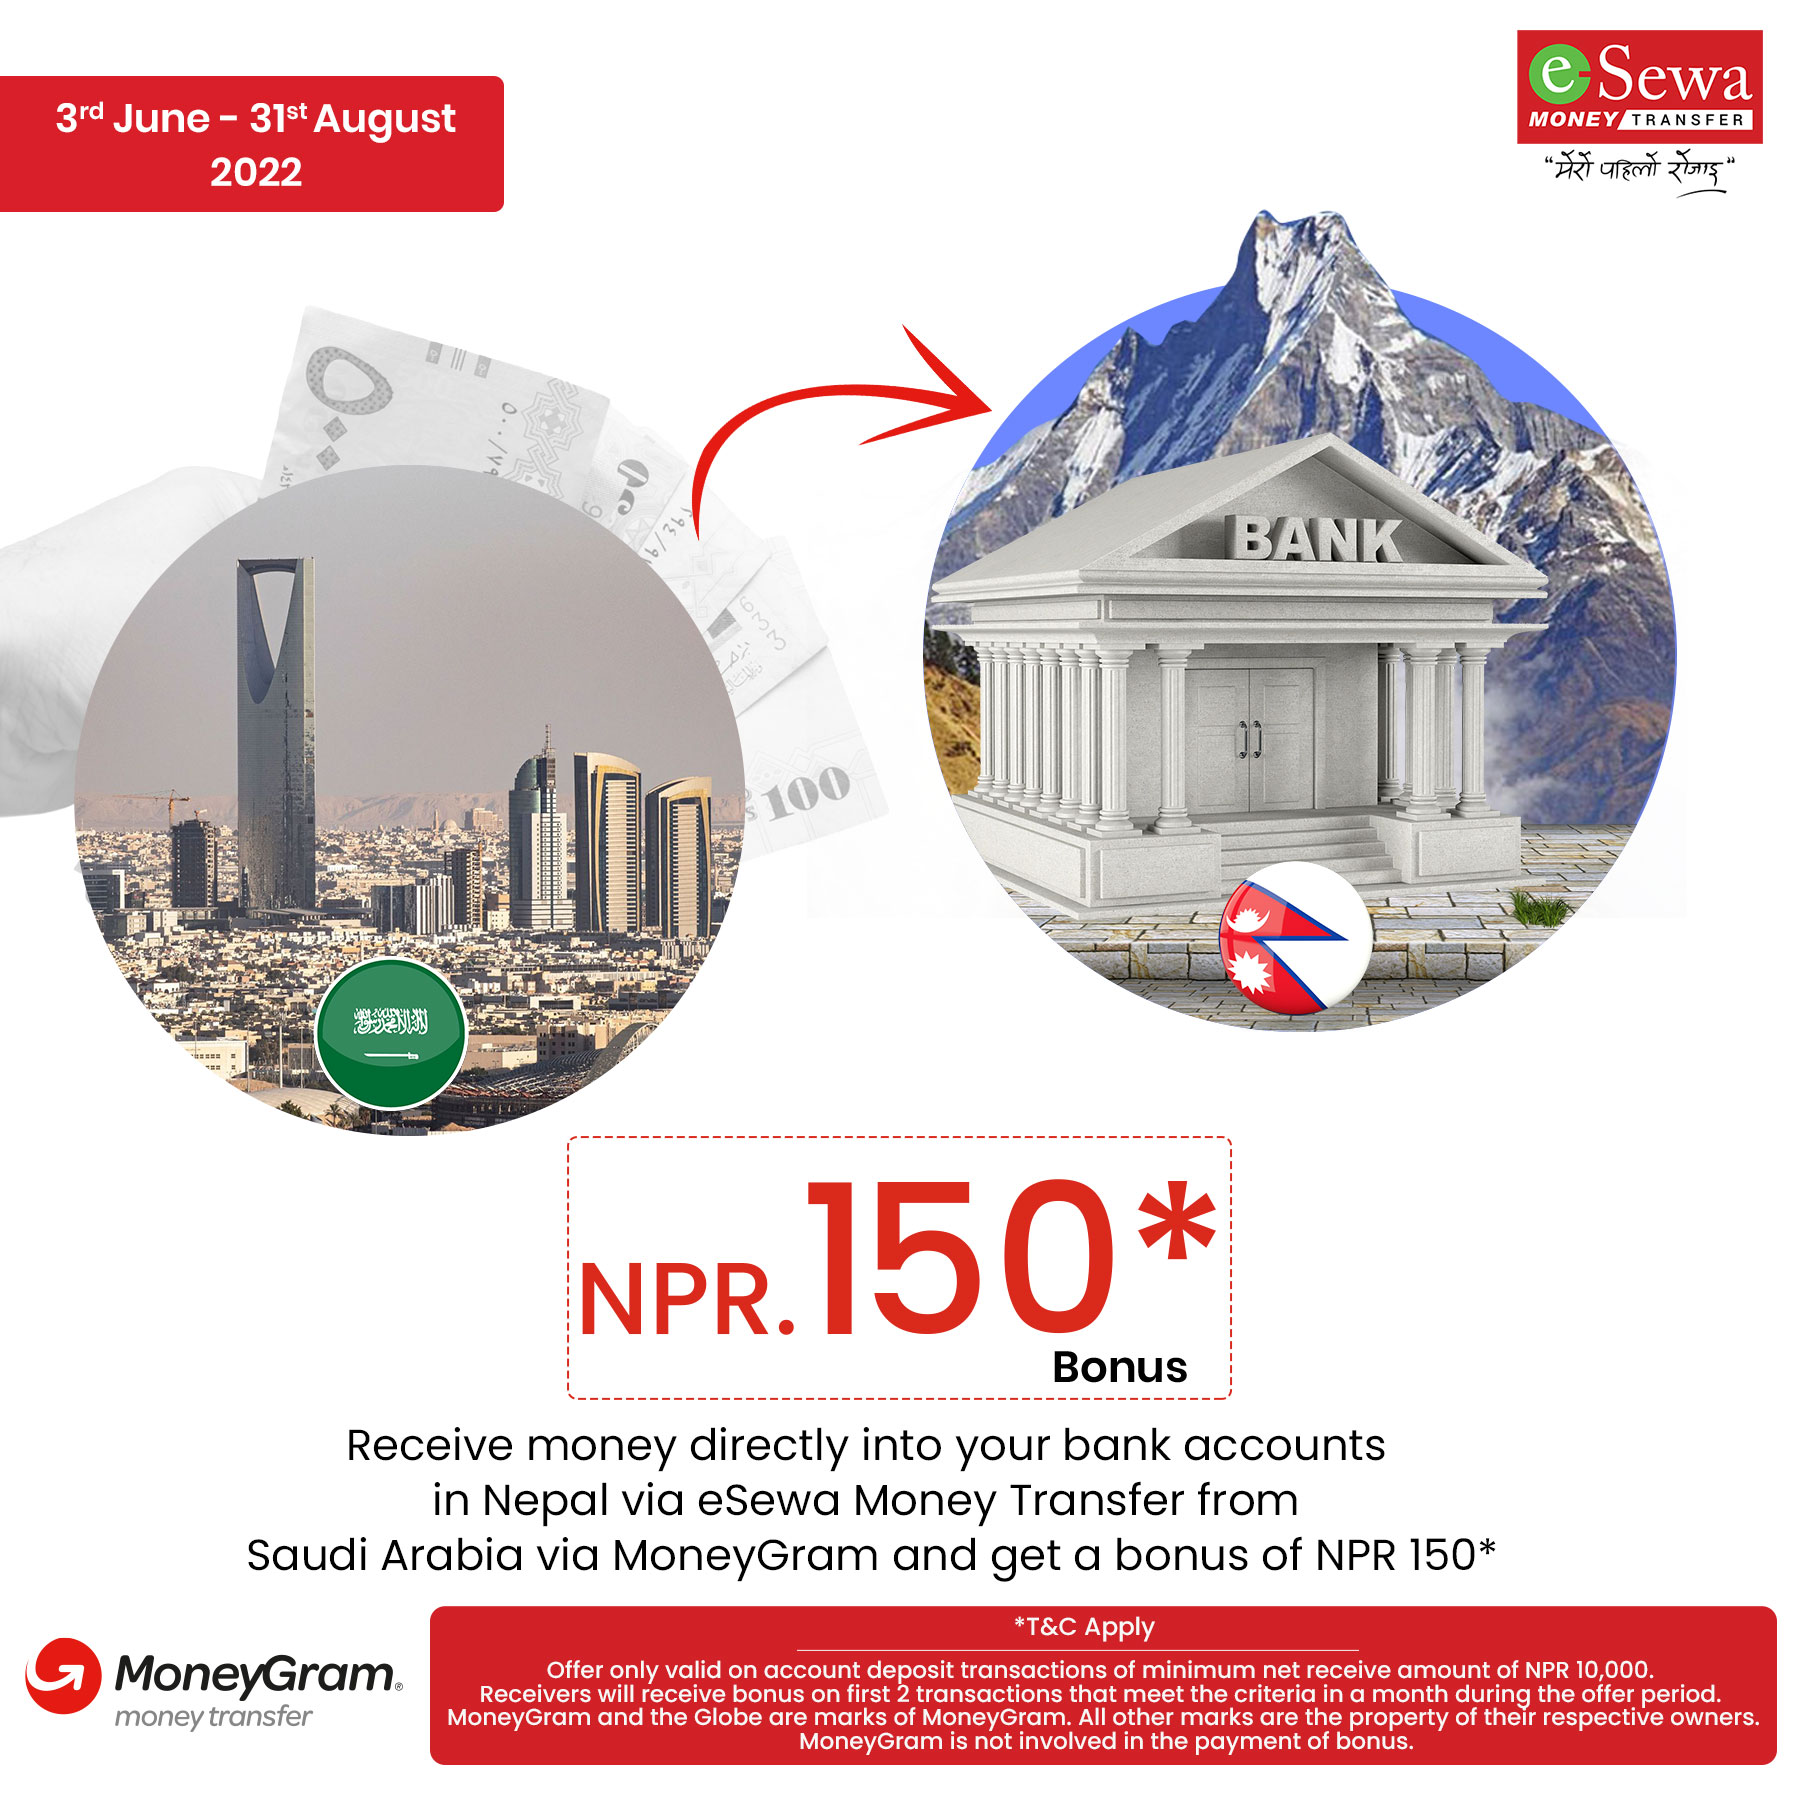 MoneyGram NPR. 150 bonus campaign from Saudi Arabia